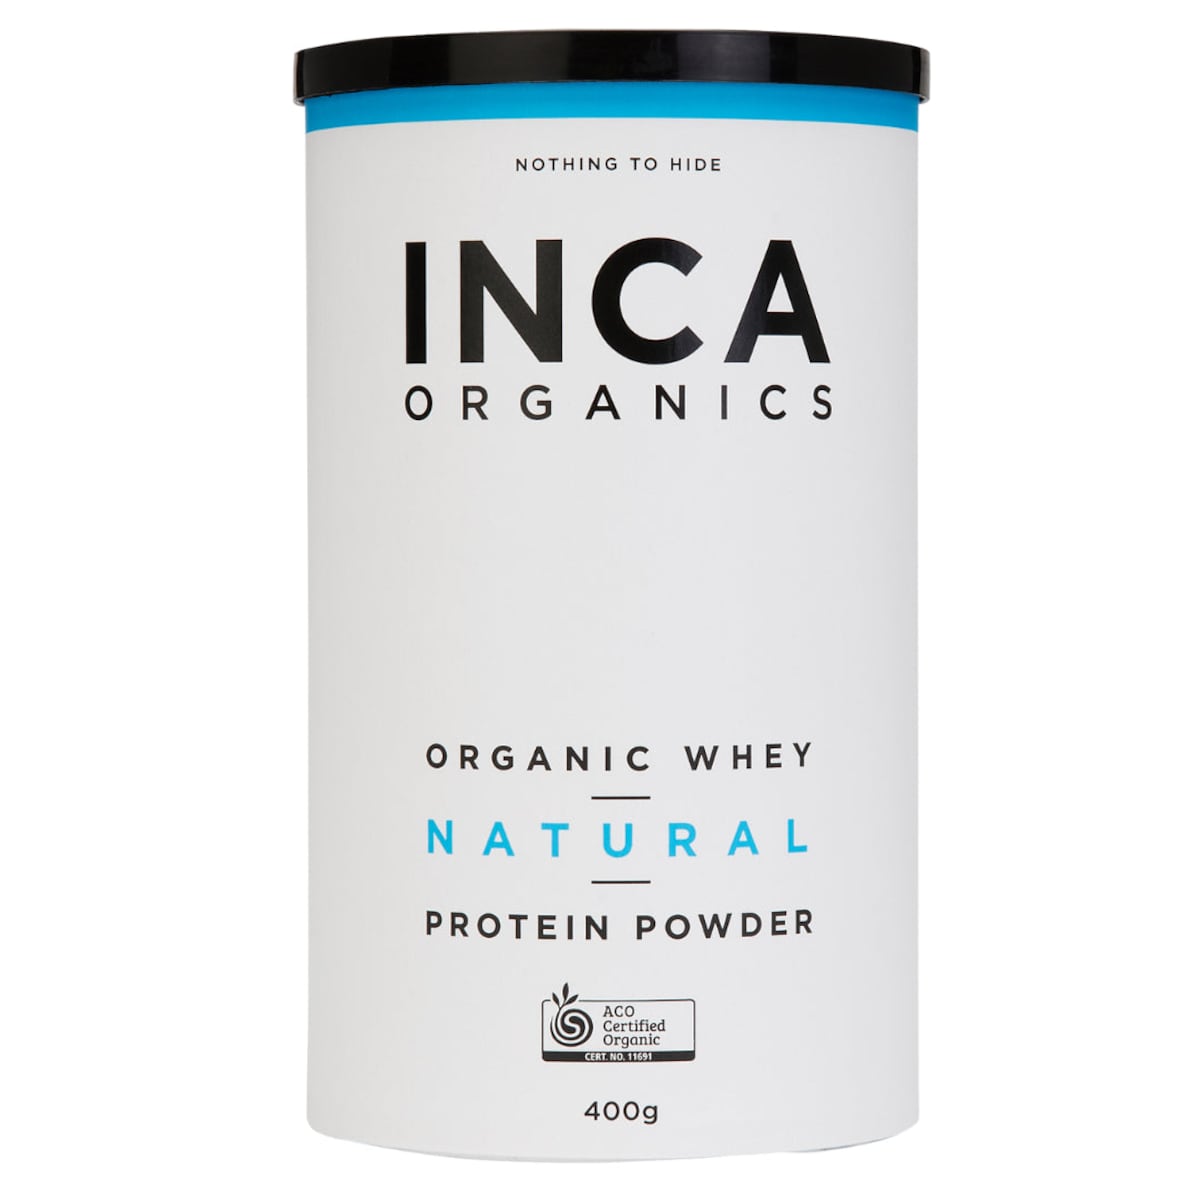 Inca Organics Organic Whey Protein Powder Natural 400g Australia